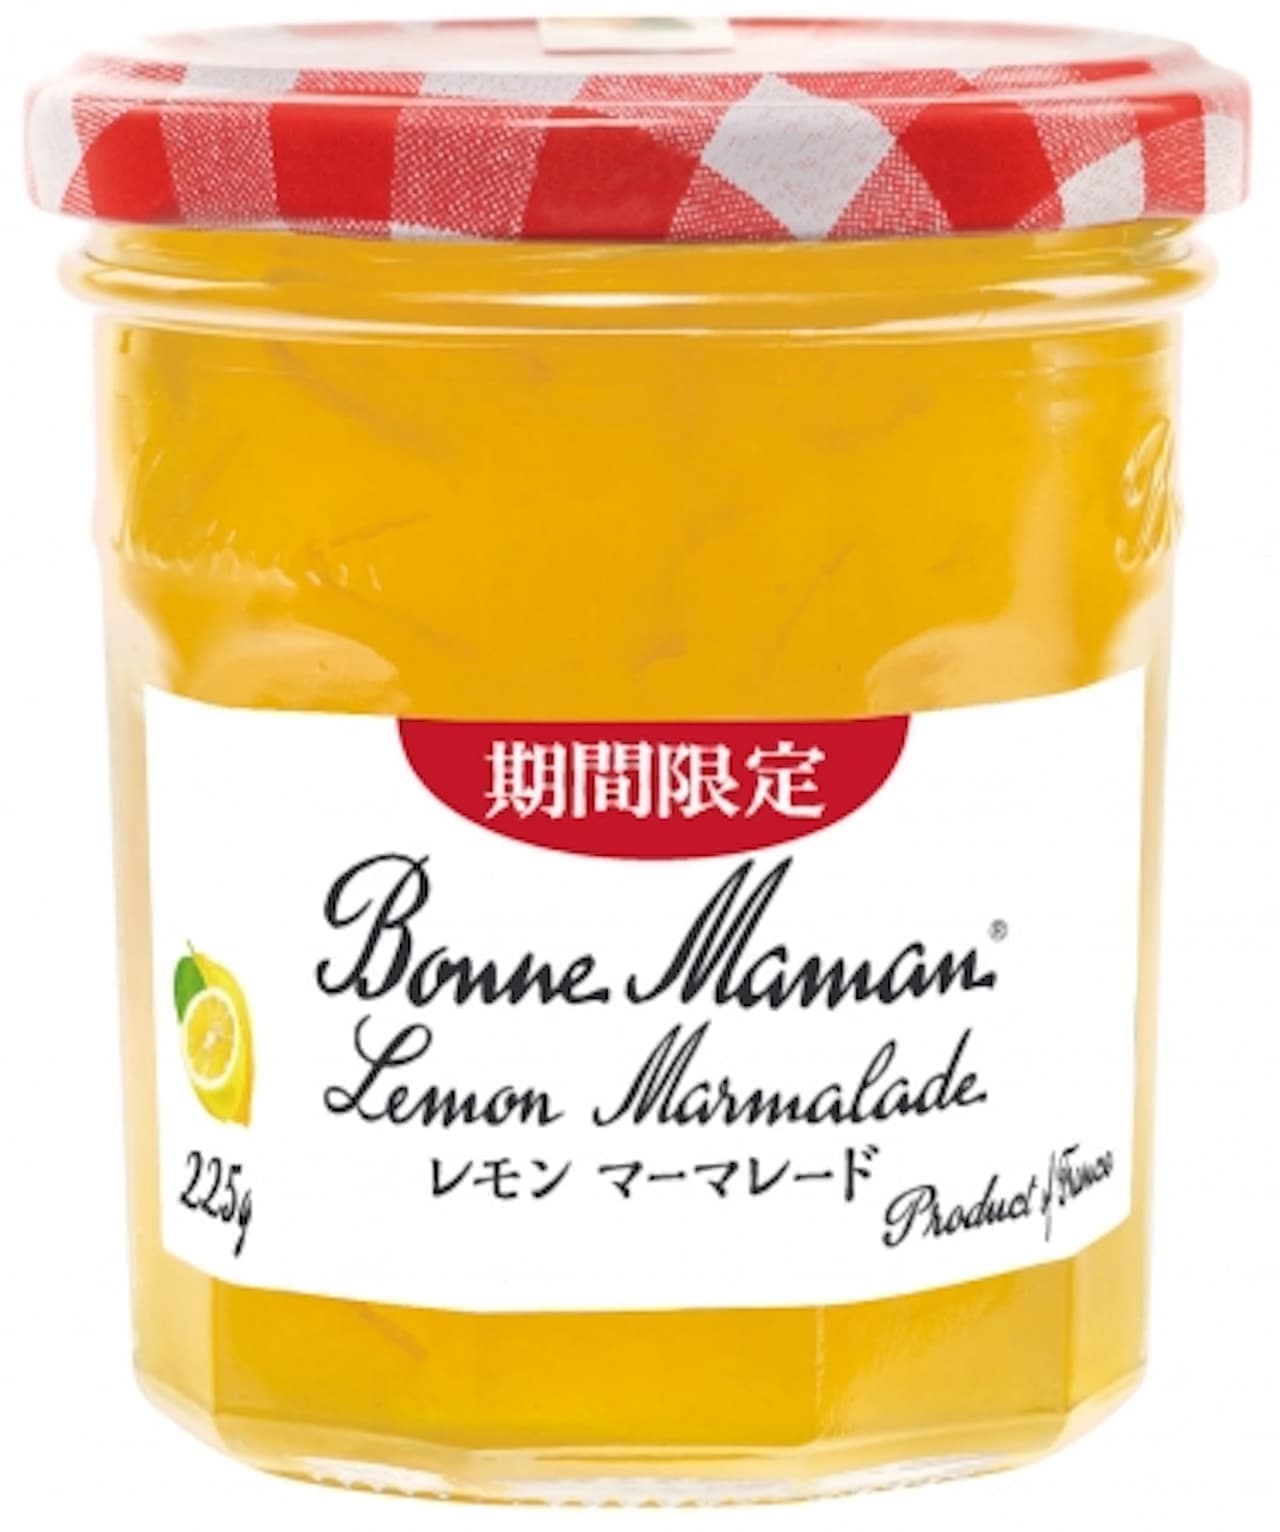 "Bonne Maman Lemon Marmalade" for a limited time